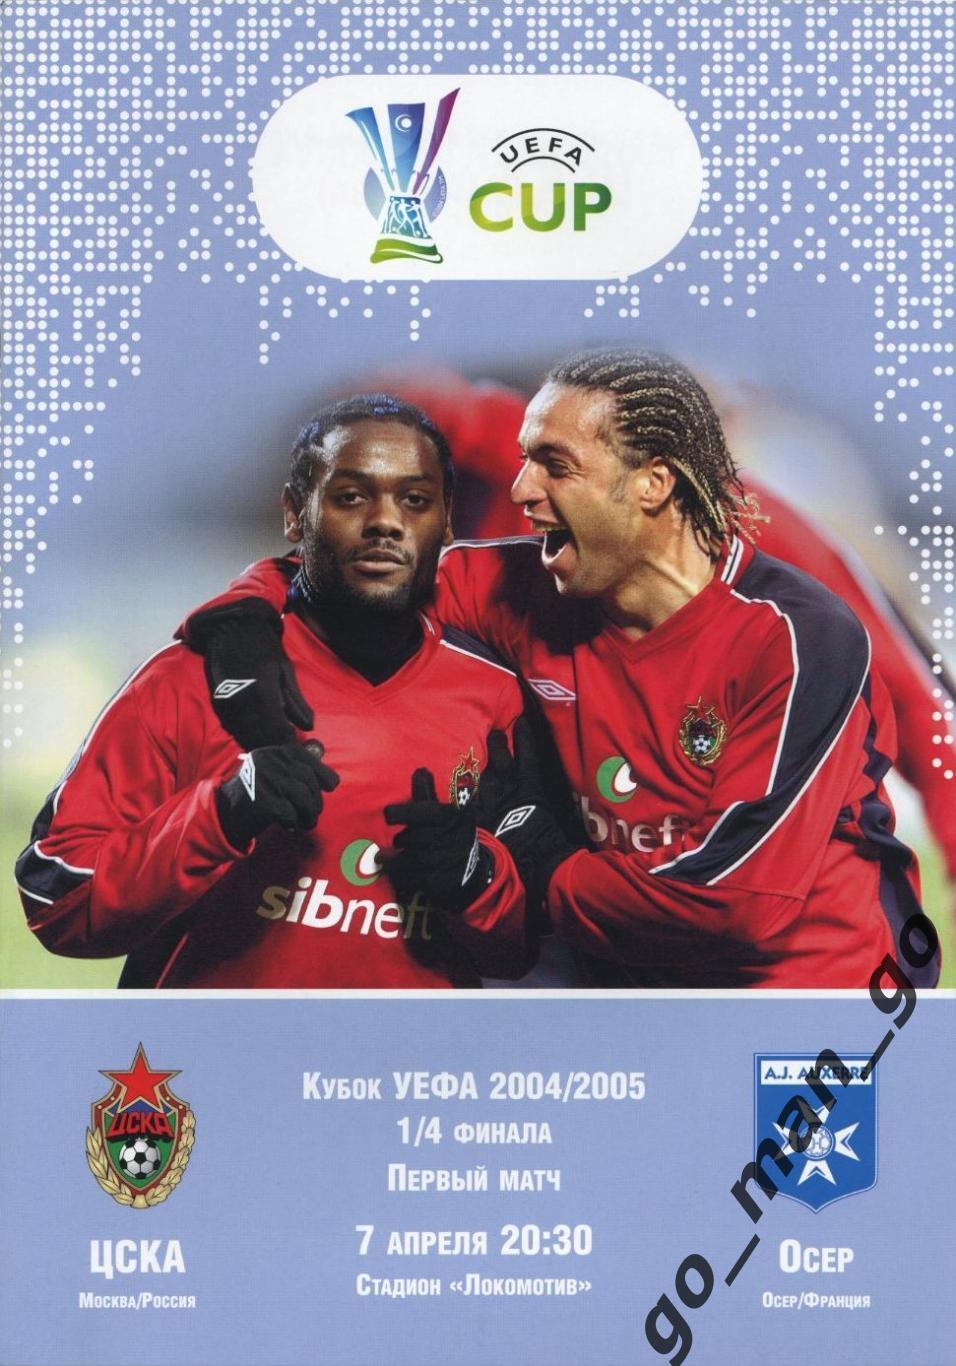 ЦСКА Москва – ОСЕР 07.04.2005, кубок УЕФА, 1/4 финала.